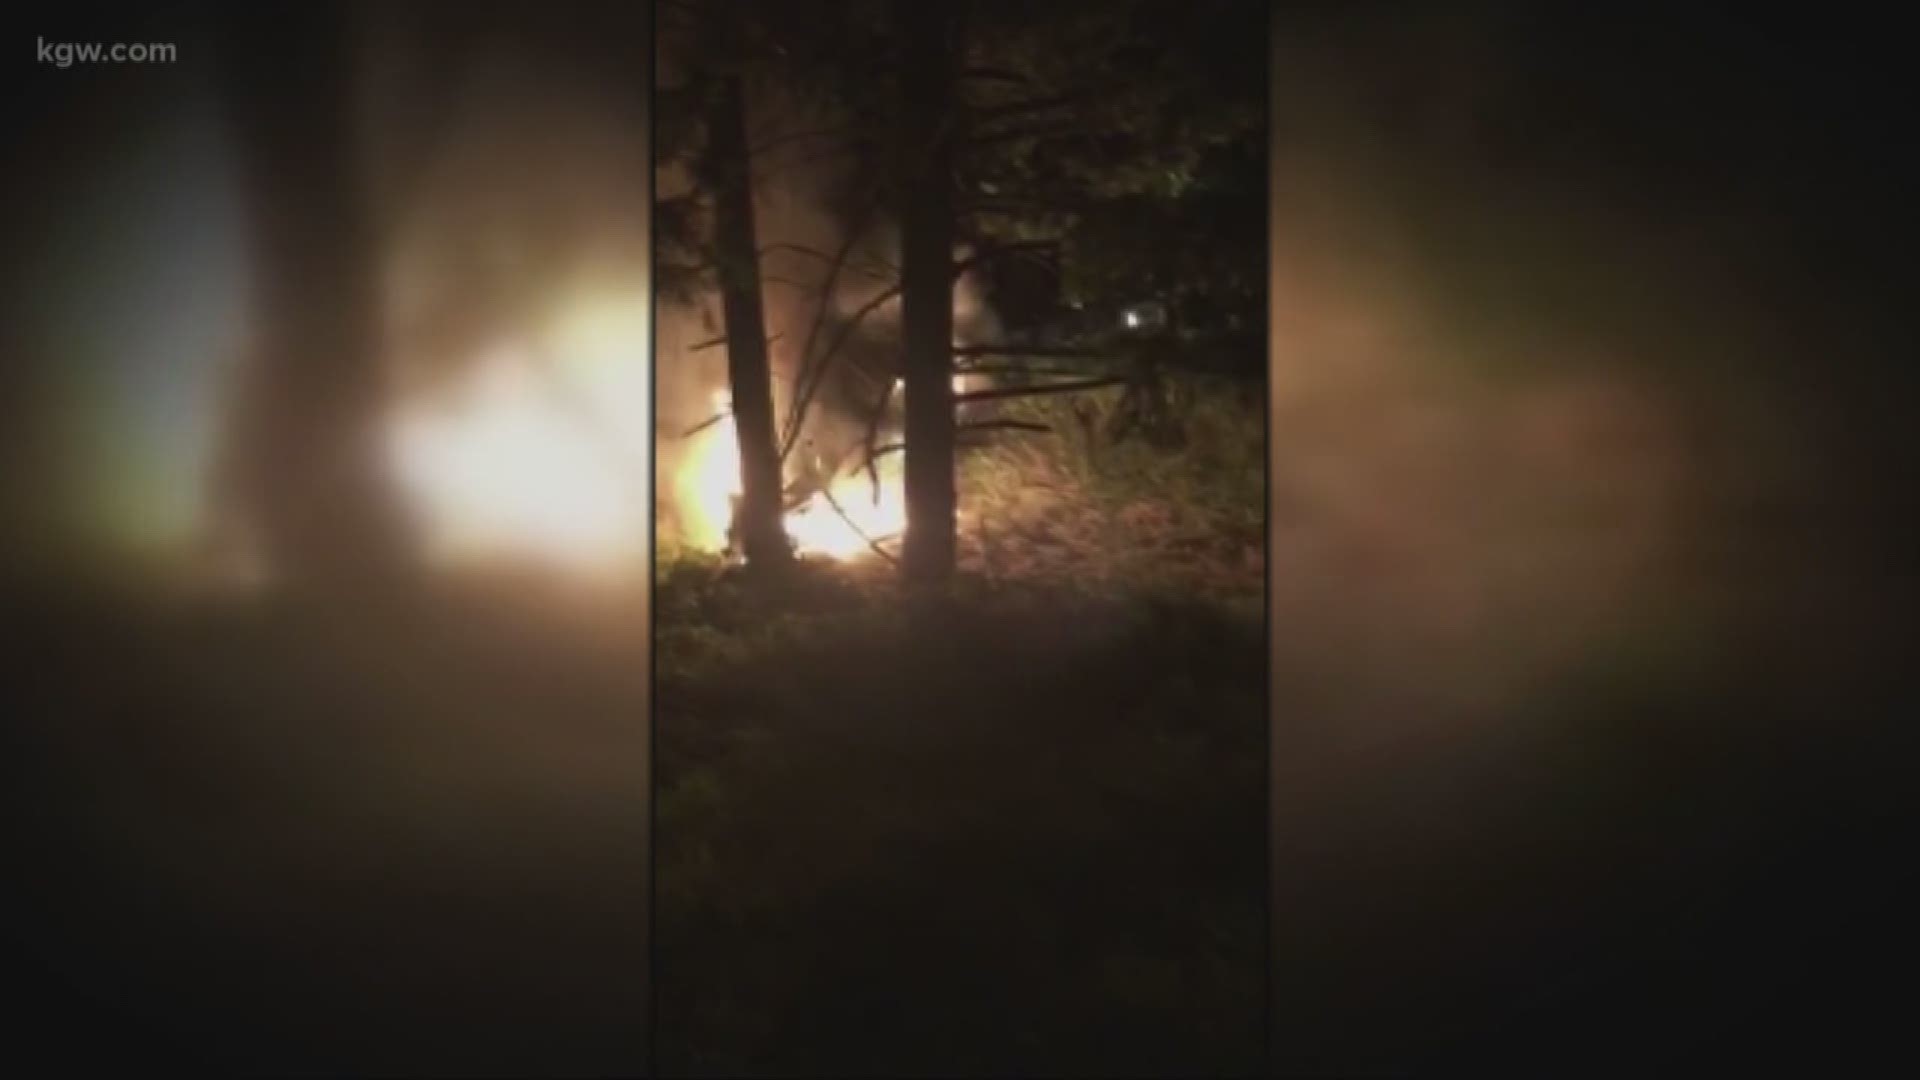 Man attempts to save victim from fiery crash near Ridgefield